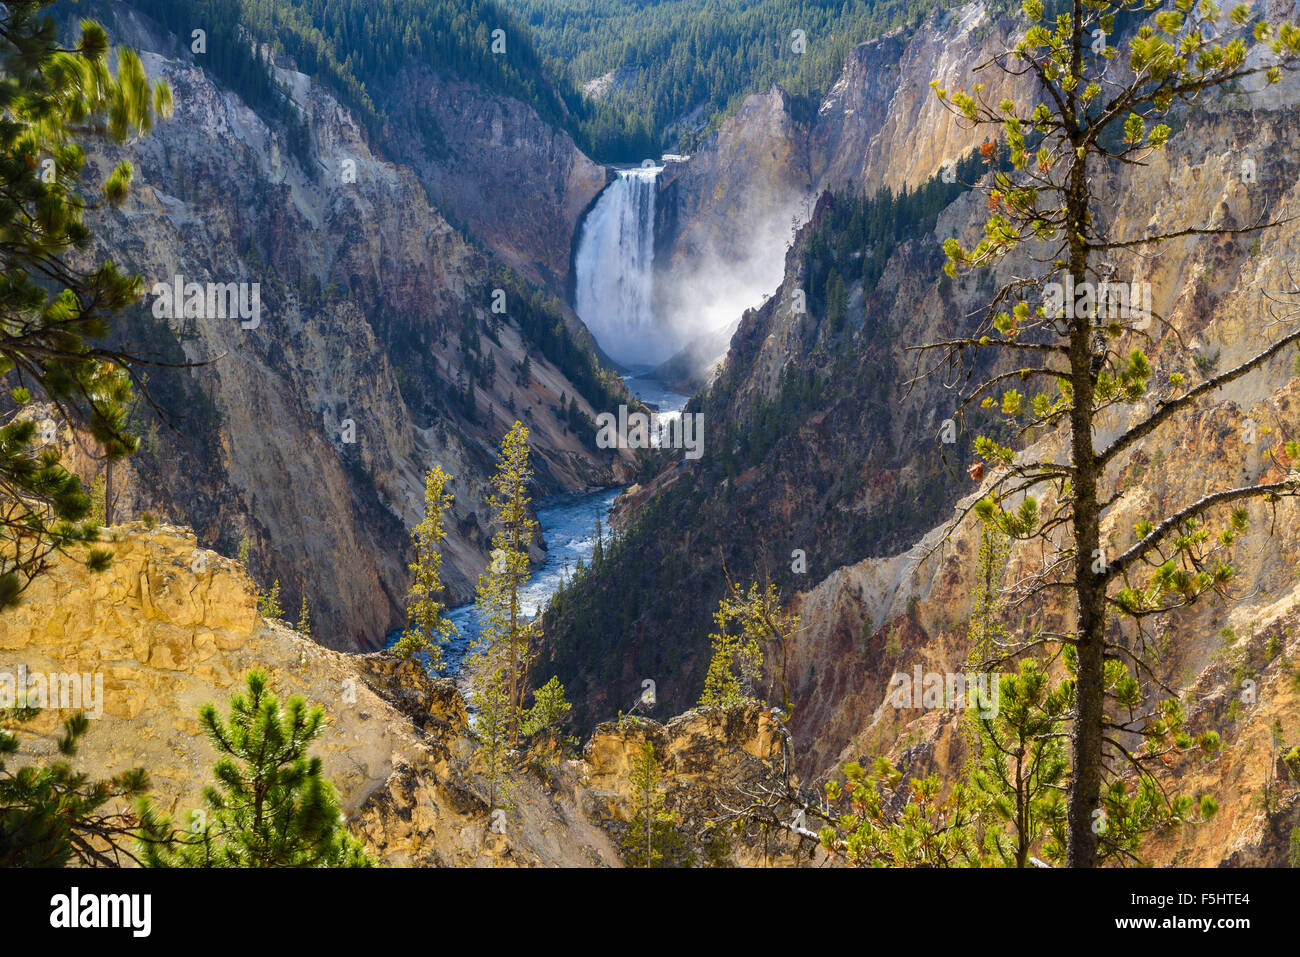 Lower Falls et Grand Canyon de la Yellowstone, provenant d'artistes Point, le Parc National de Yellowstone, Wyoming, USA Banque D'Images